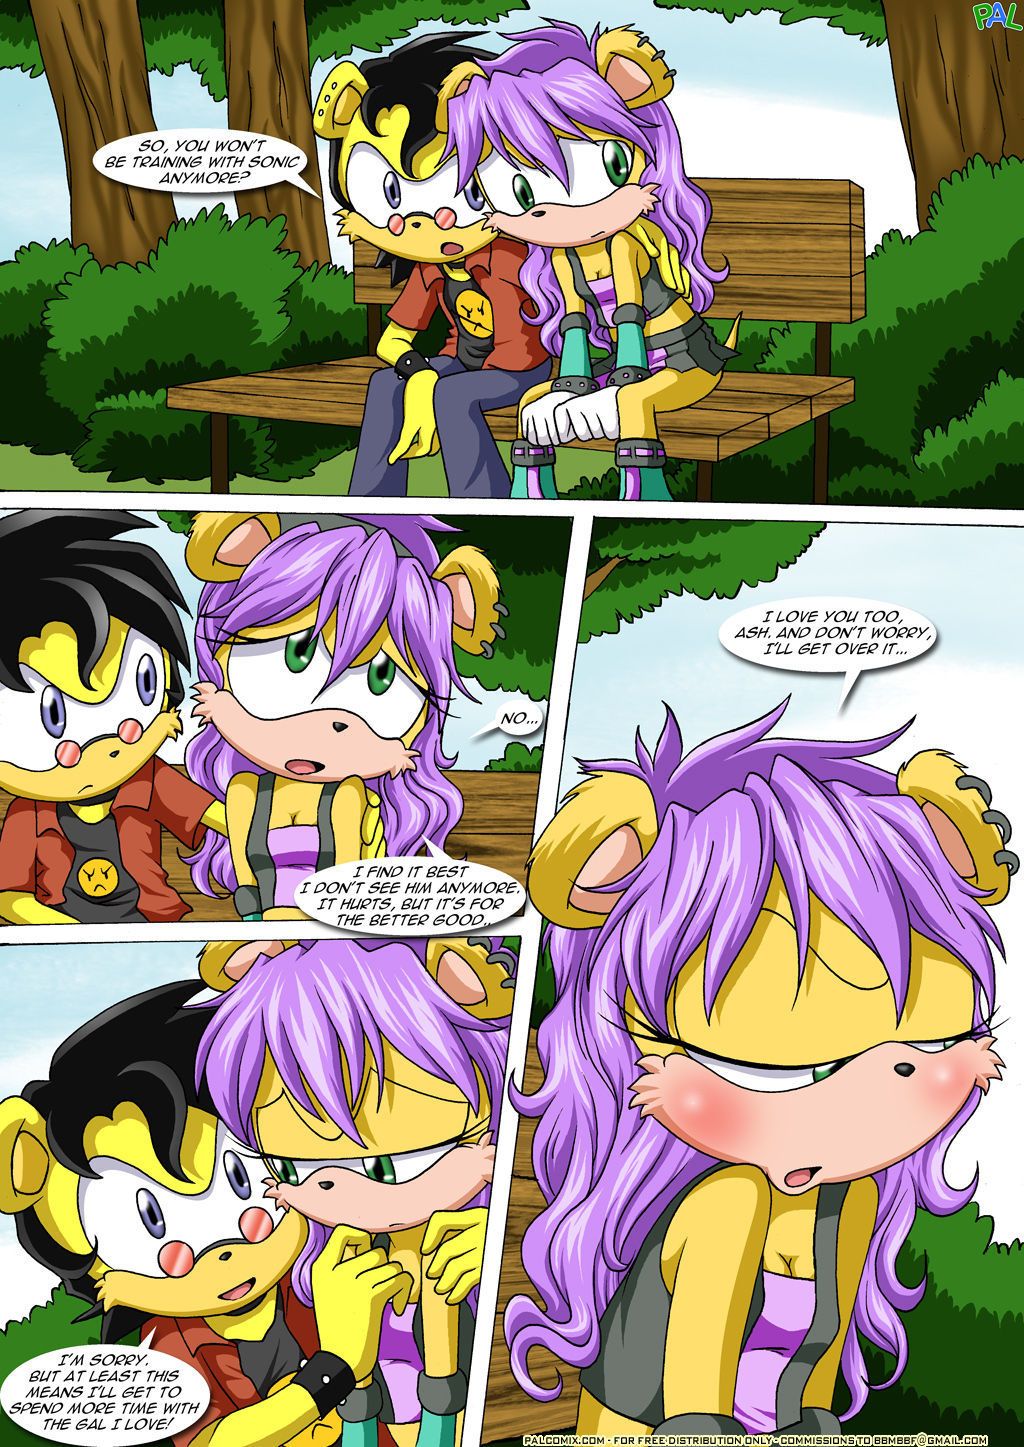 Palcomix Betrayal (Sonic the Hedgehog) - part 2